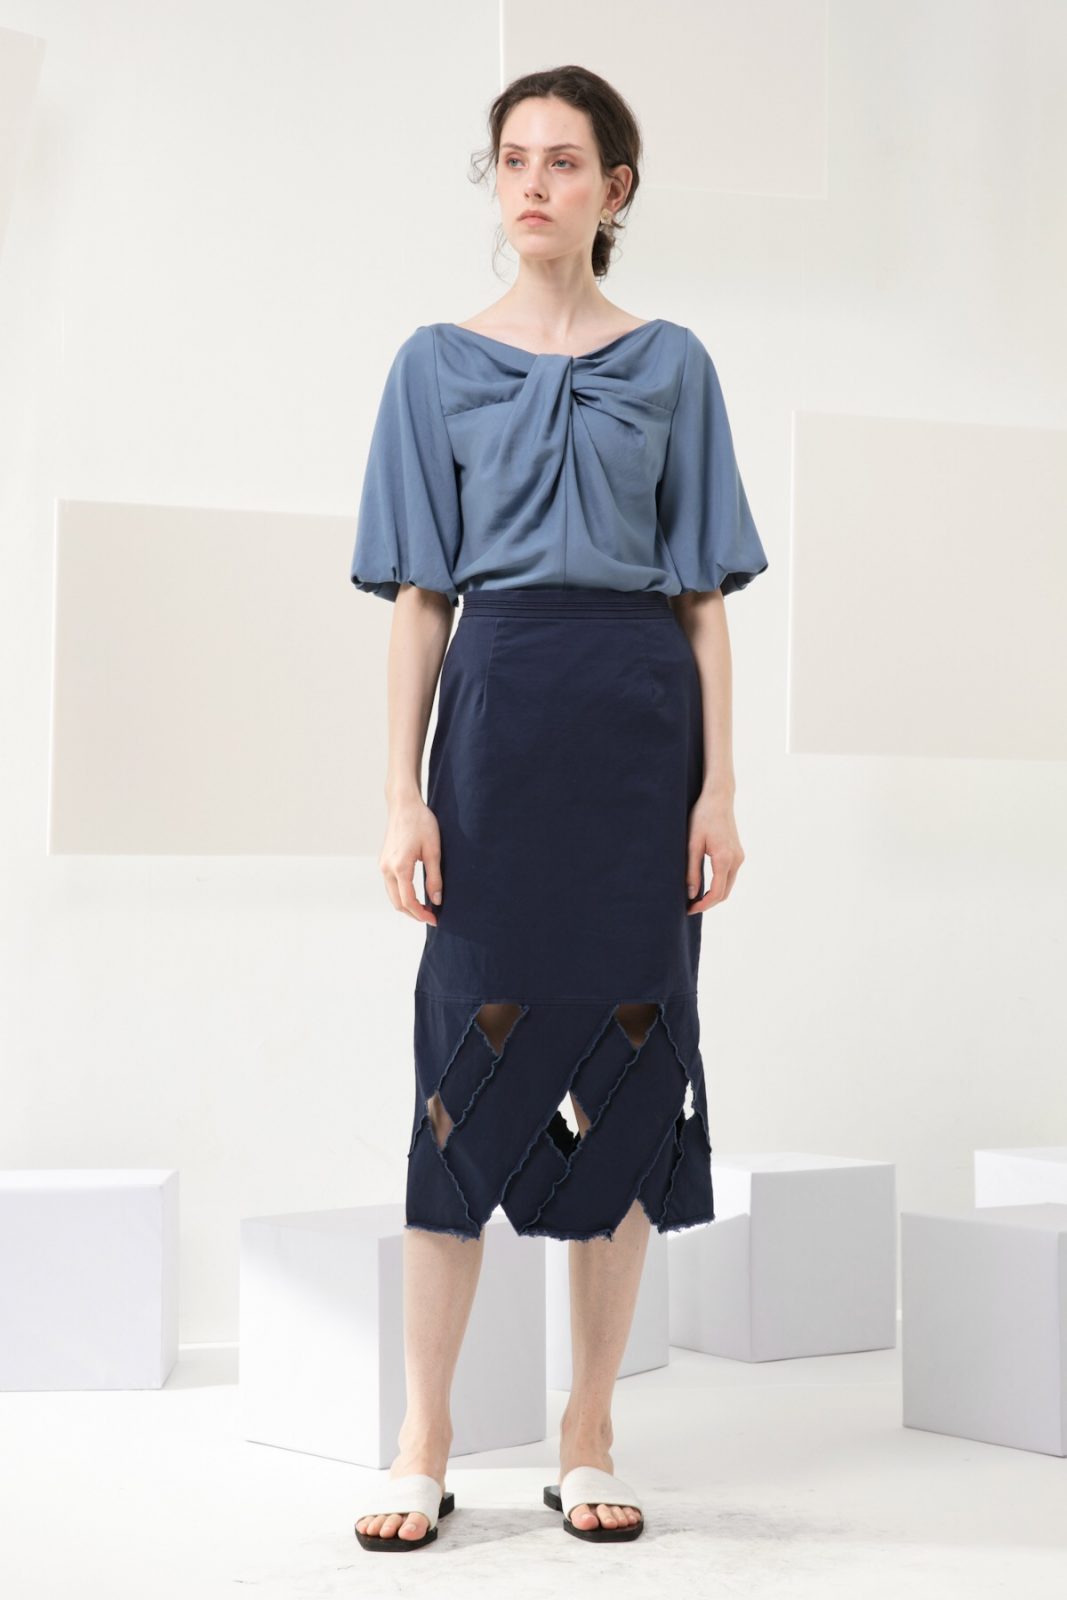 SKYE minimalist women clothing fashion Kai Knot Top blue